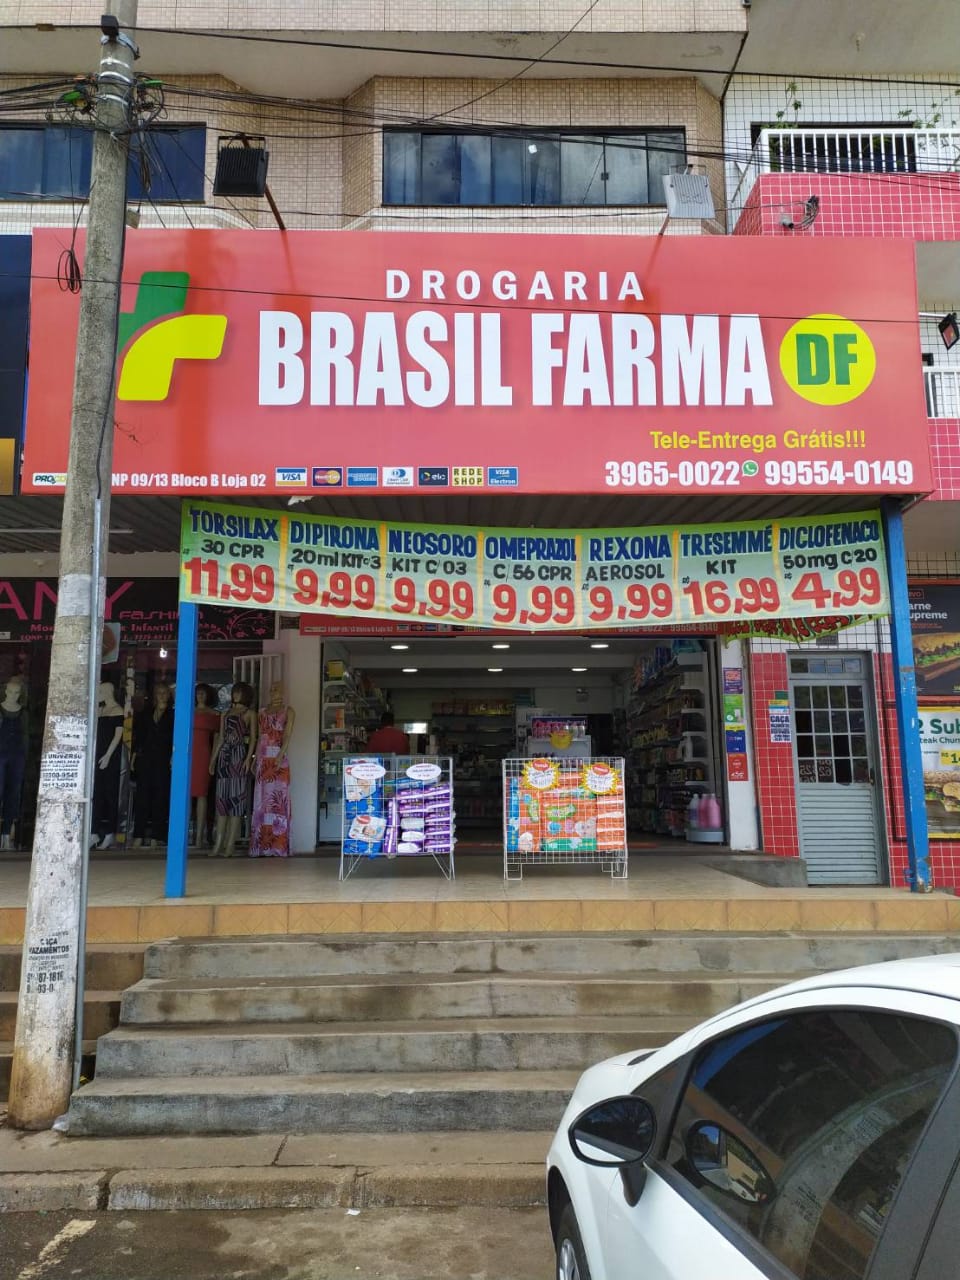 Drogaria Brasil Farma